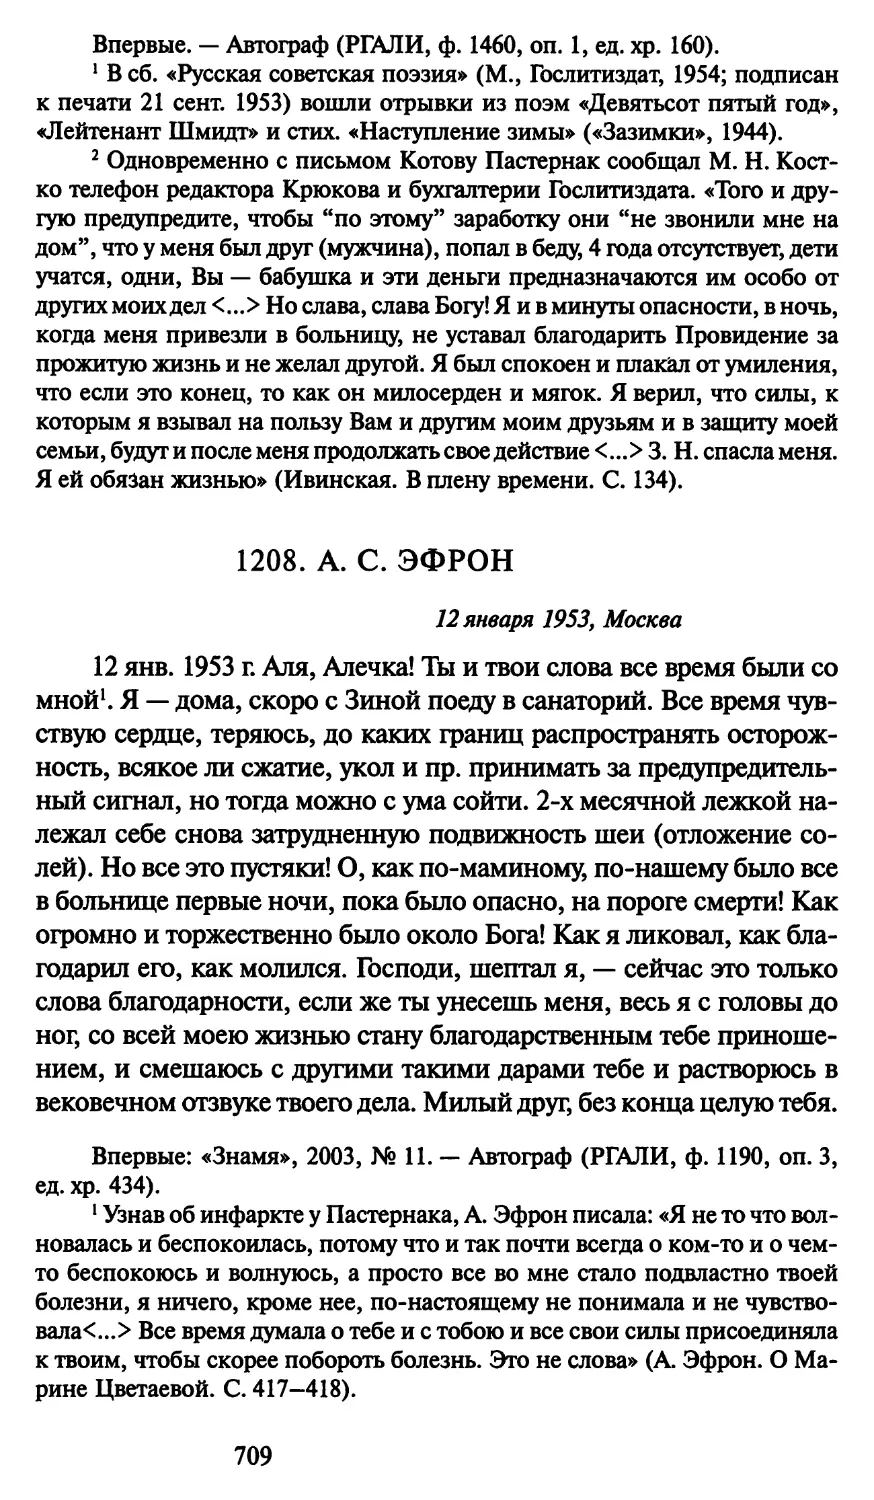 1208. А. С. Эфрон 12 января 1953